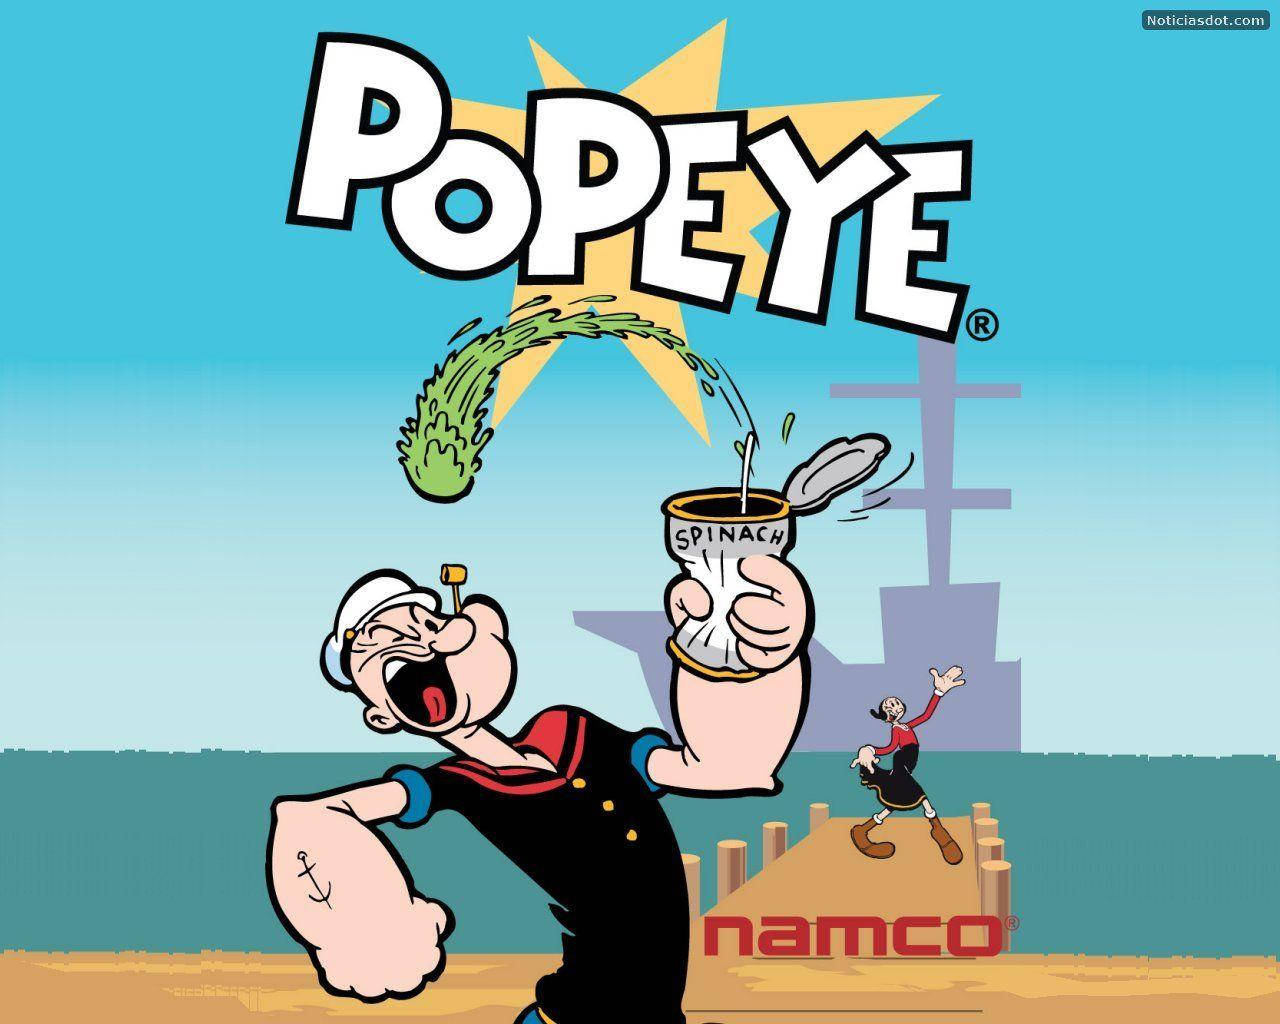 The Popeye Game